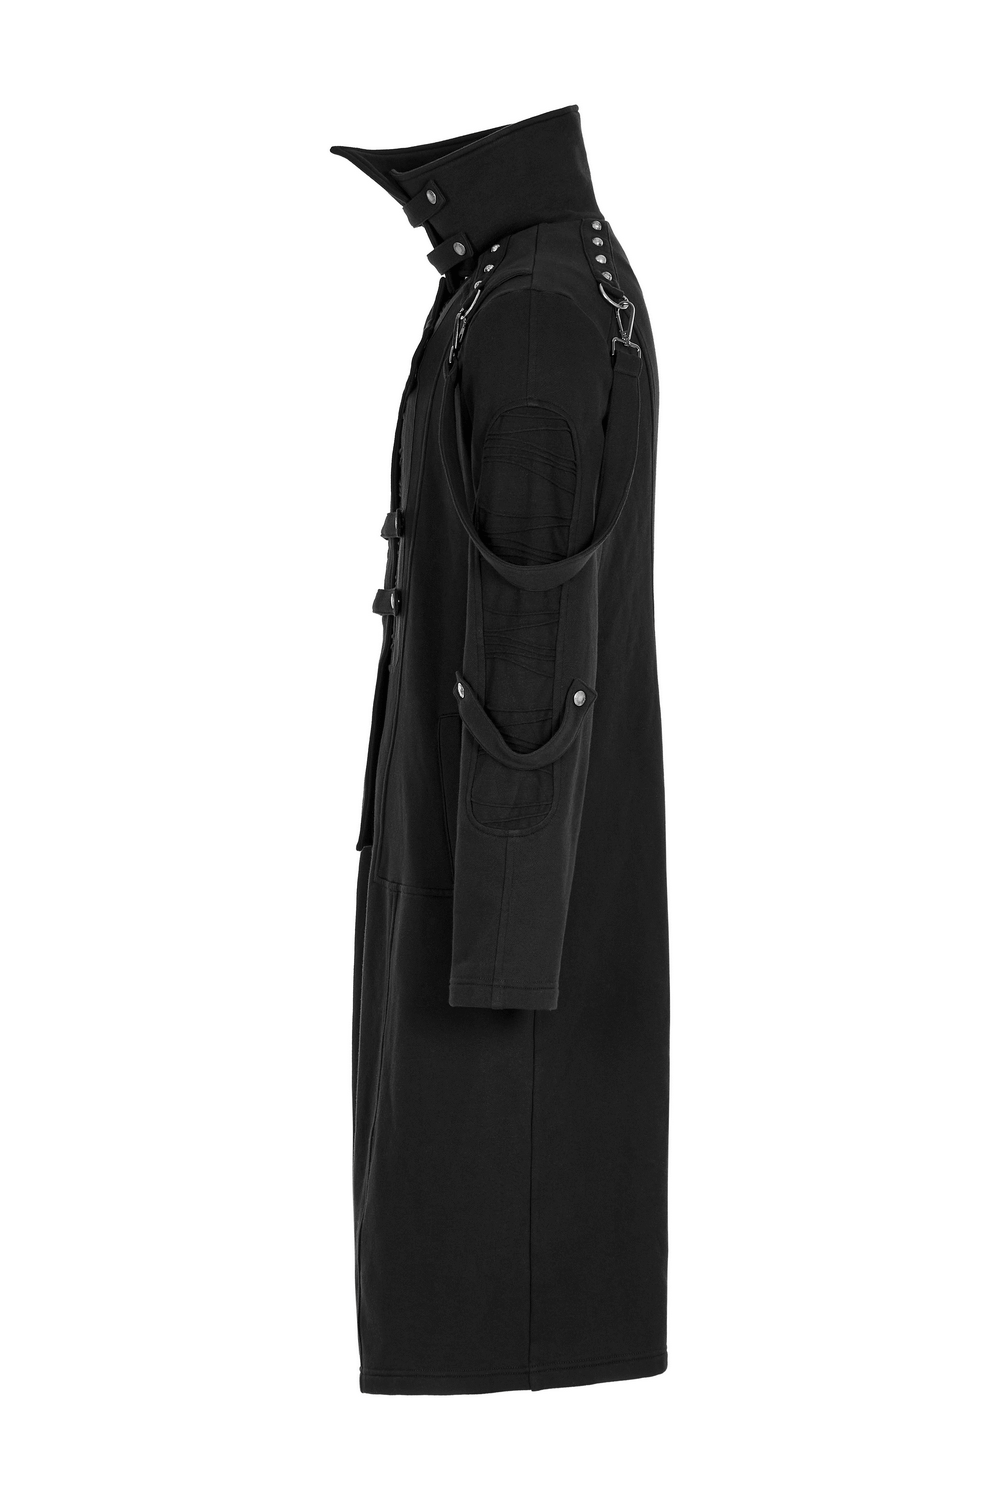 Stylish Men's Gothic Trench Coat With Asymmetric High Collar - HARD'N'HEAVY